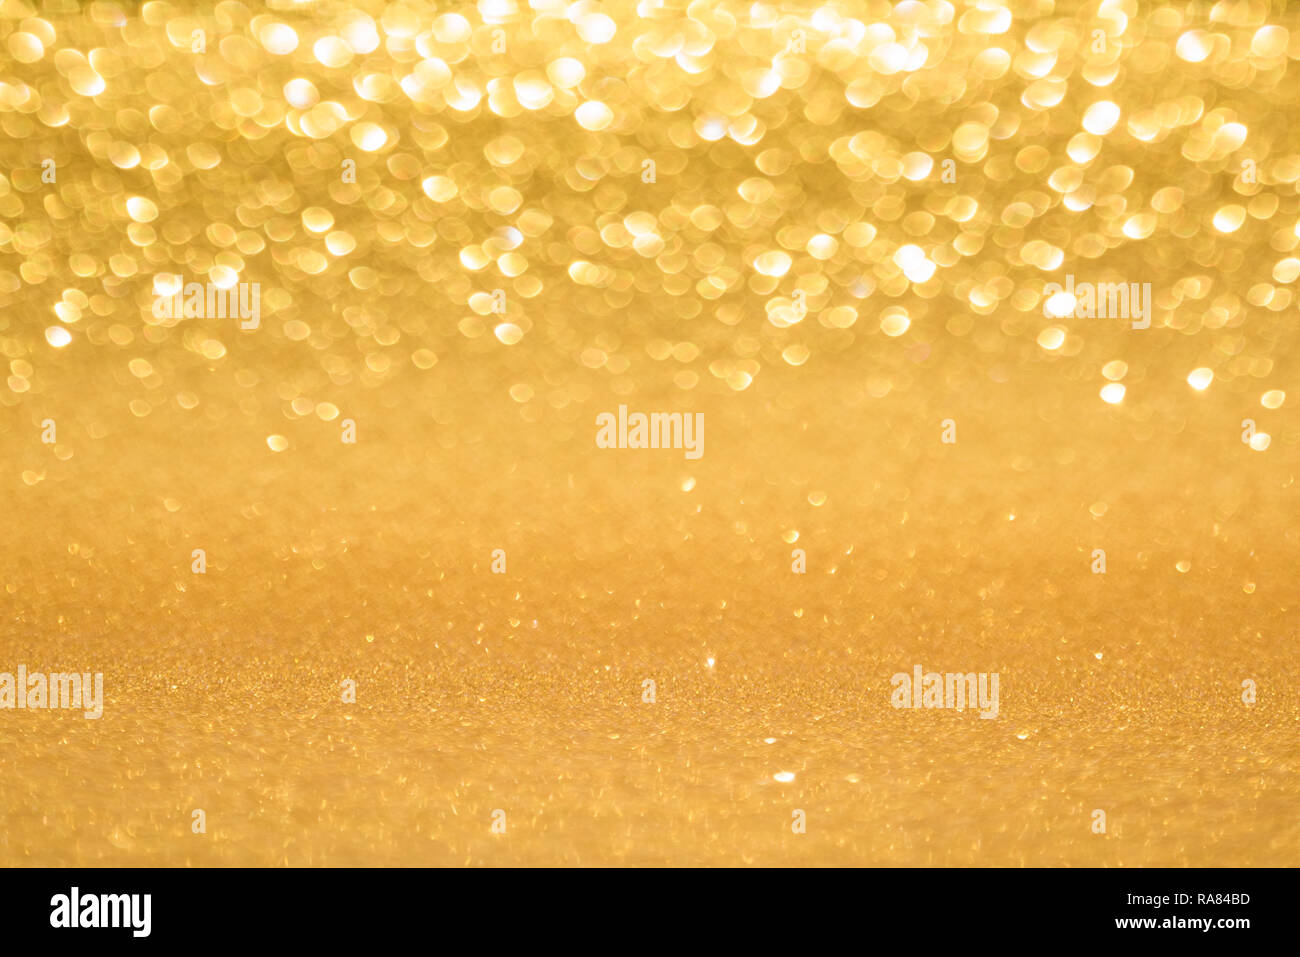 golden blurred background Stock Photo